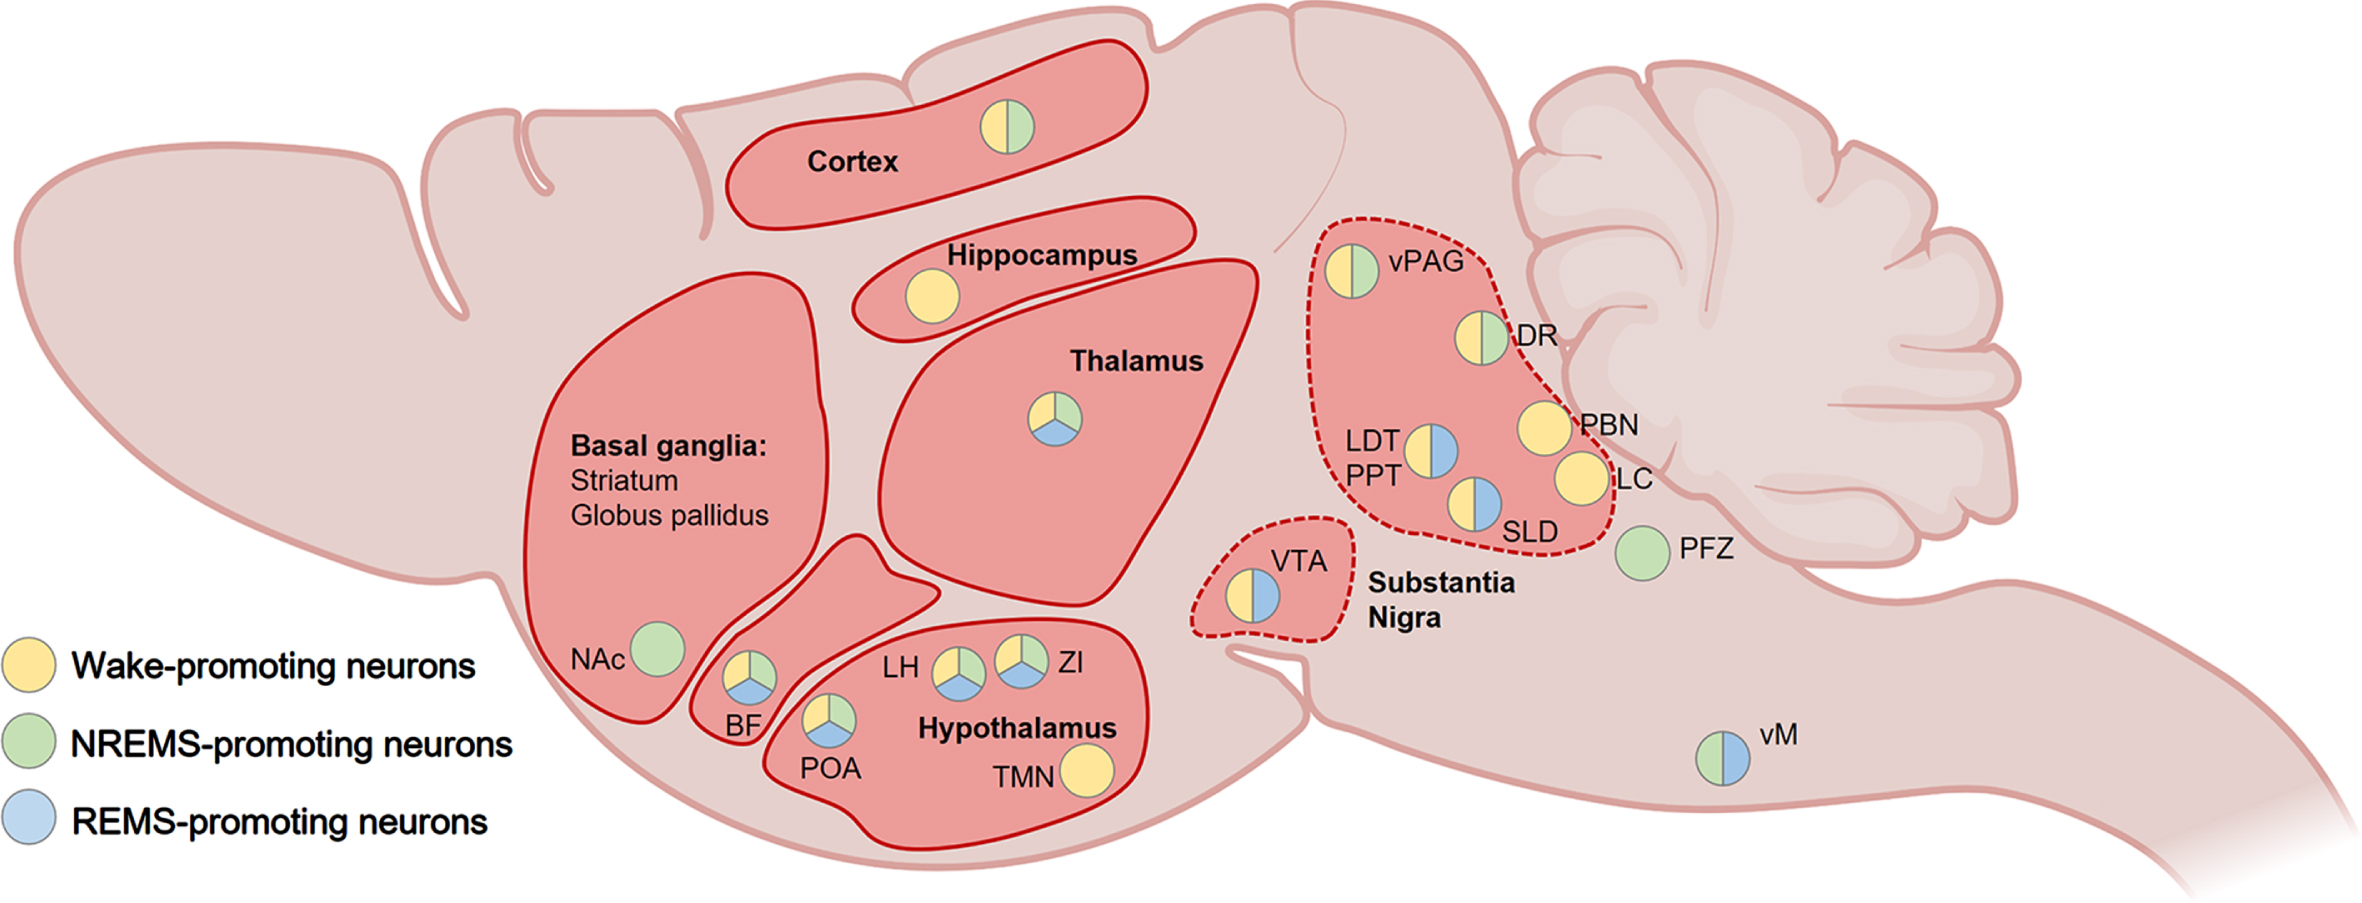 Examples of overlaps between wake- and sleep-regulating neurons and various neurodegenerative diseases in the rodent brain. Several brain regions that exhibit neuropathological alterations in Alzheimer’s disease (e.g., hippocampus, neocortex, basal forebrain, thalamus, hypothalamus, striatum, brainstem), Parkinson’s disease (e.g., basal ganglia, substantia nigra, thalamus, hypothalamus) or Huntington’s disease (e.g., basal ganglia, substantia nigra, thalamus, hypothalamus) share neuronal signaling pathways with regions exerting control over sleep and wakefulness. BF, basal forebrain; DR, dorsal raphe; LC, locus coeruleus; LDT, laterodorsal tegmental nucleus; LH, lateral hypothalamus; NAc, nucleus accumbens; PBN, parabrachial nucleus; POA, preoptic area of the hypothalamus; PPT, pedunculopontine tegmental nucleus; PFZ, parafacial zone; SLD, sublaterodorsal tegmental nucleus; TMN, tuberomammillary nucleus of the hypothalamus; vM, vental medulla; vPAG, ventral periaqueductal gray; VTA, ventral tegmental area; ZI, zona incerta. Created with BioRender.com.